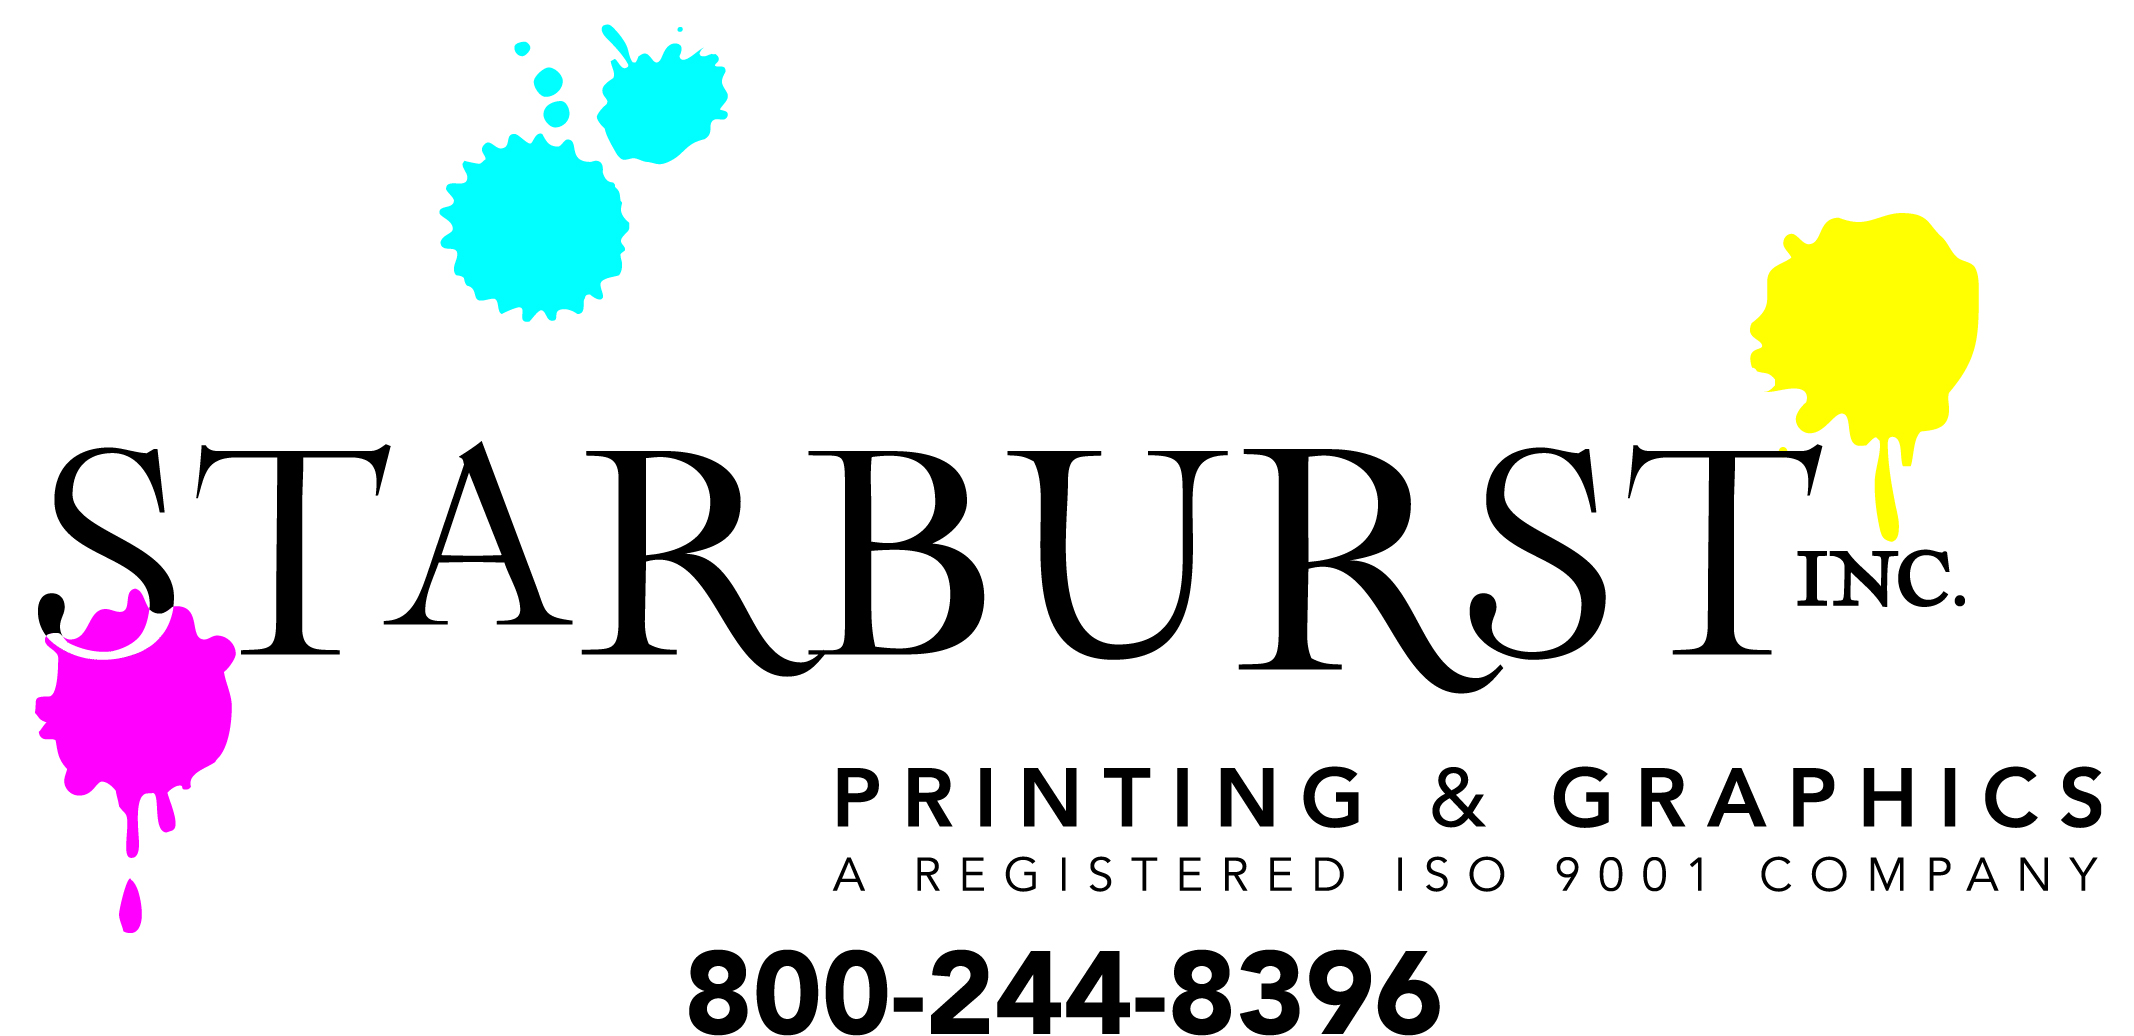 Starburst Inc. Printing & Graphics